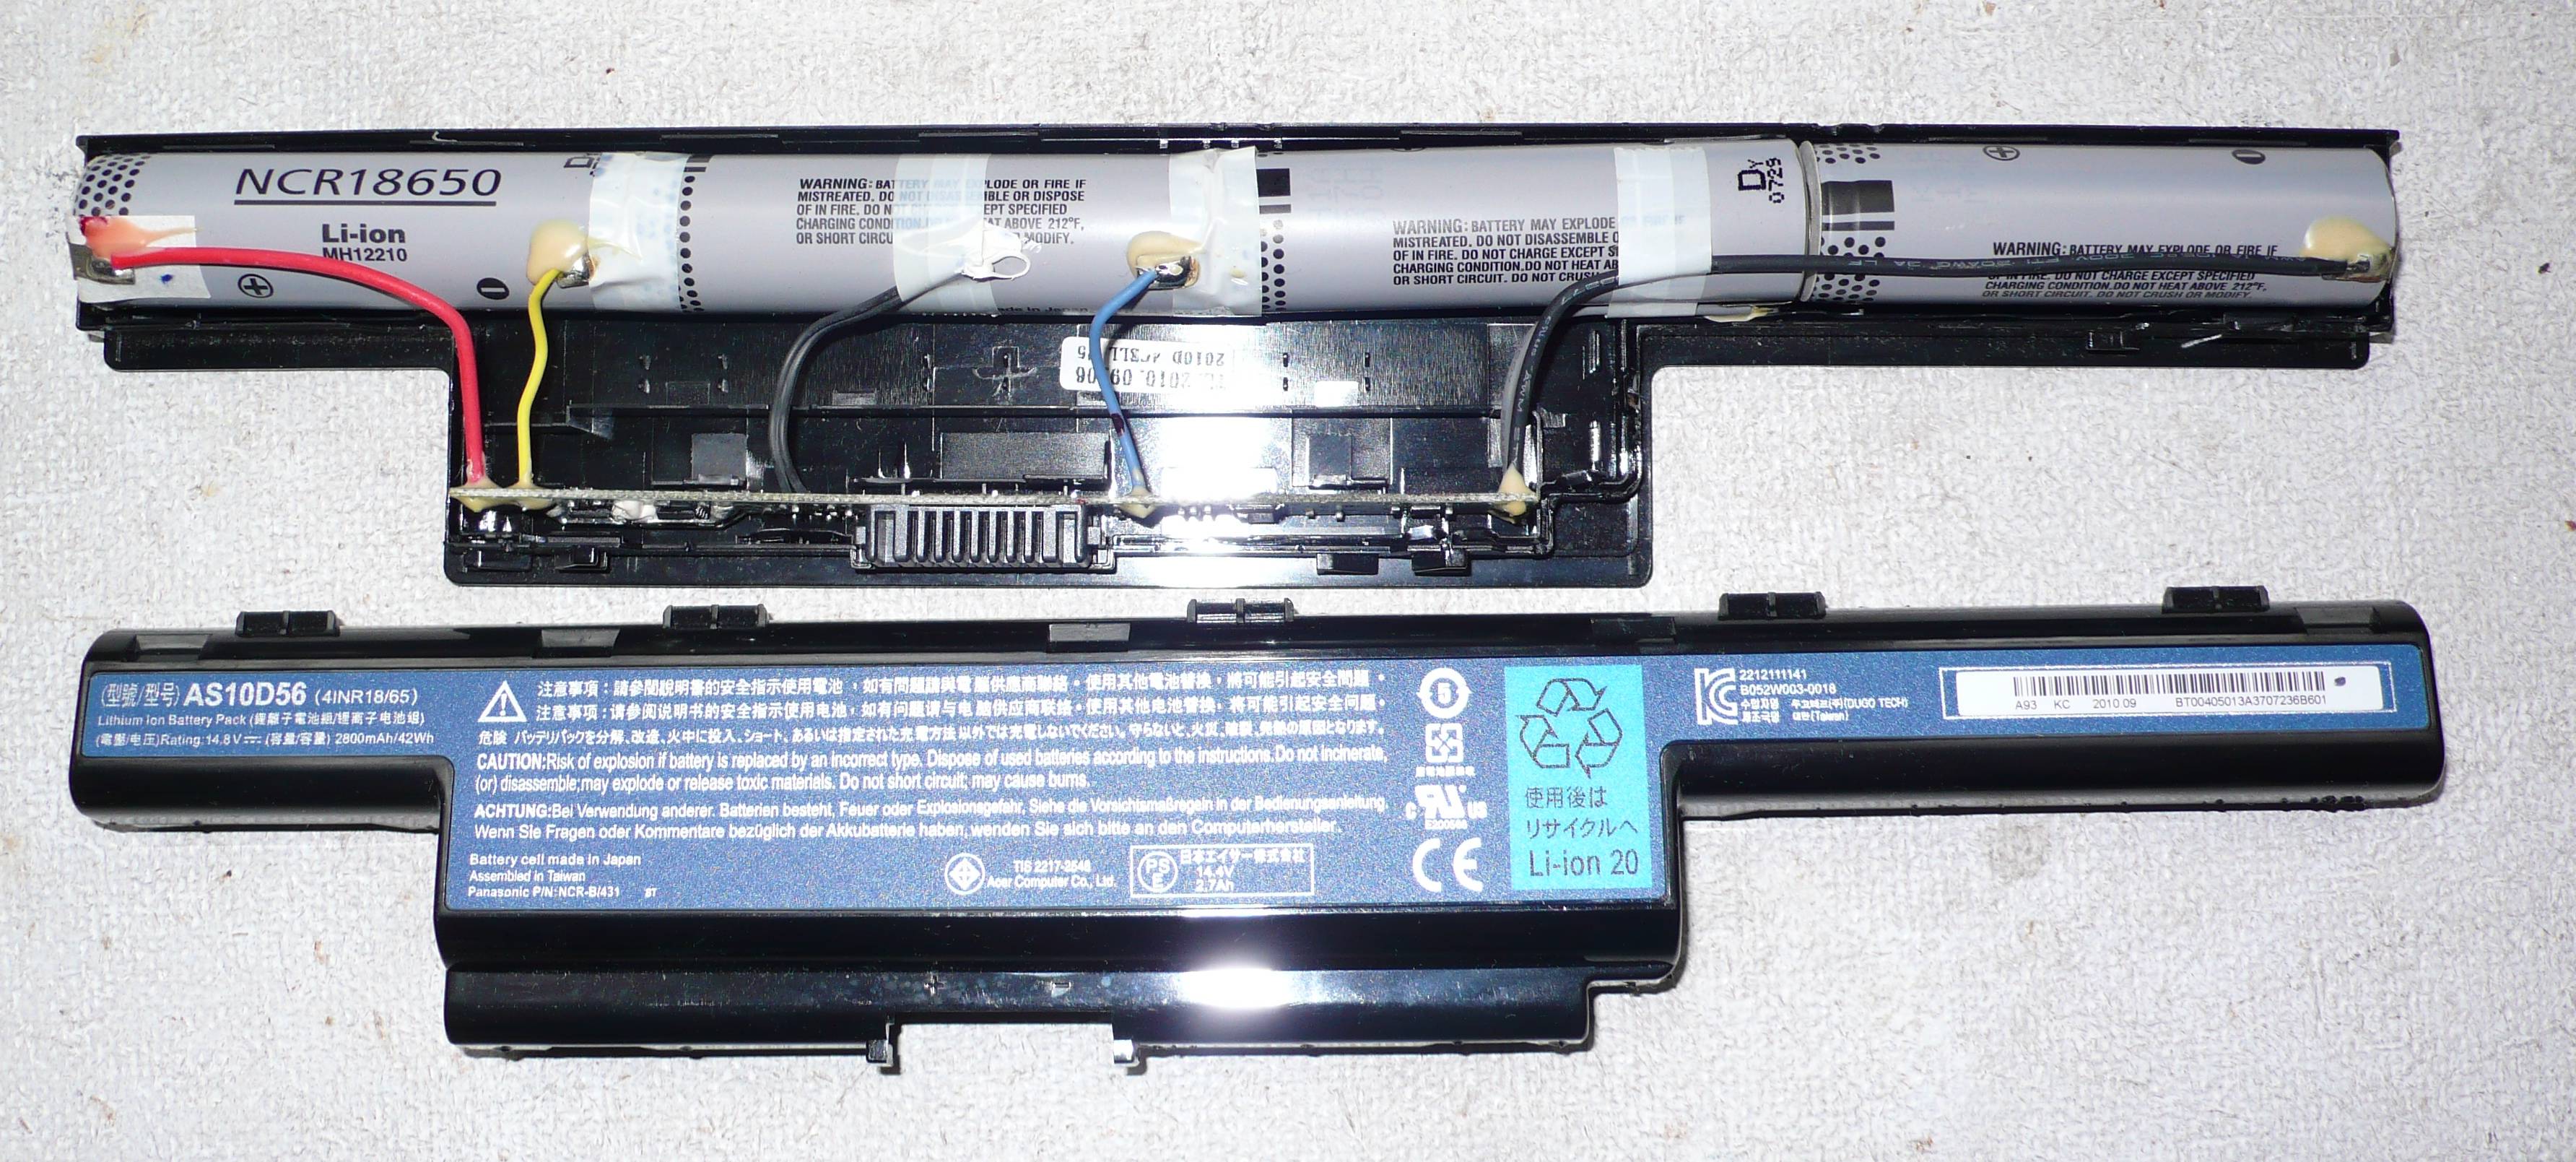 65 19 1. Батарея ноутбука Acer модель Aspire 26. Аккумулятор Acer Aspire e1-522. Аккумулятор ноутбука dell 44.